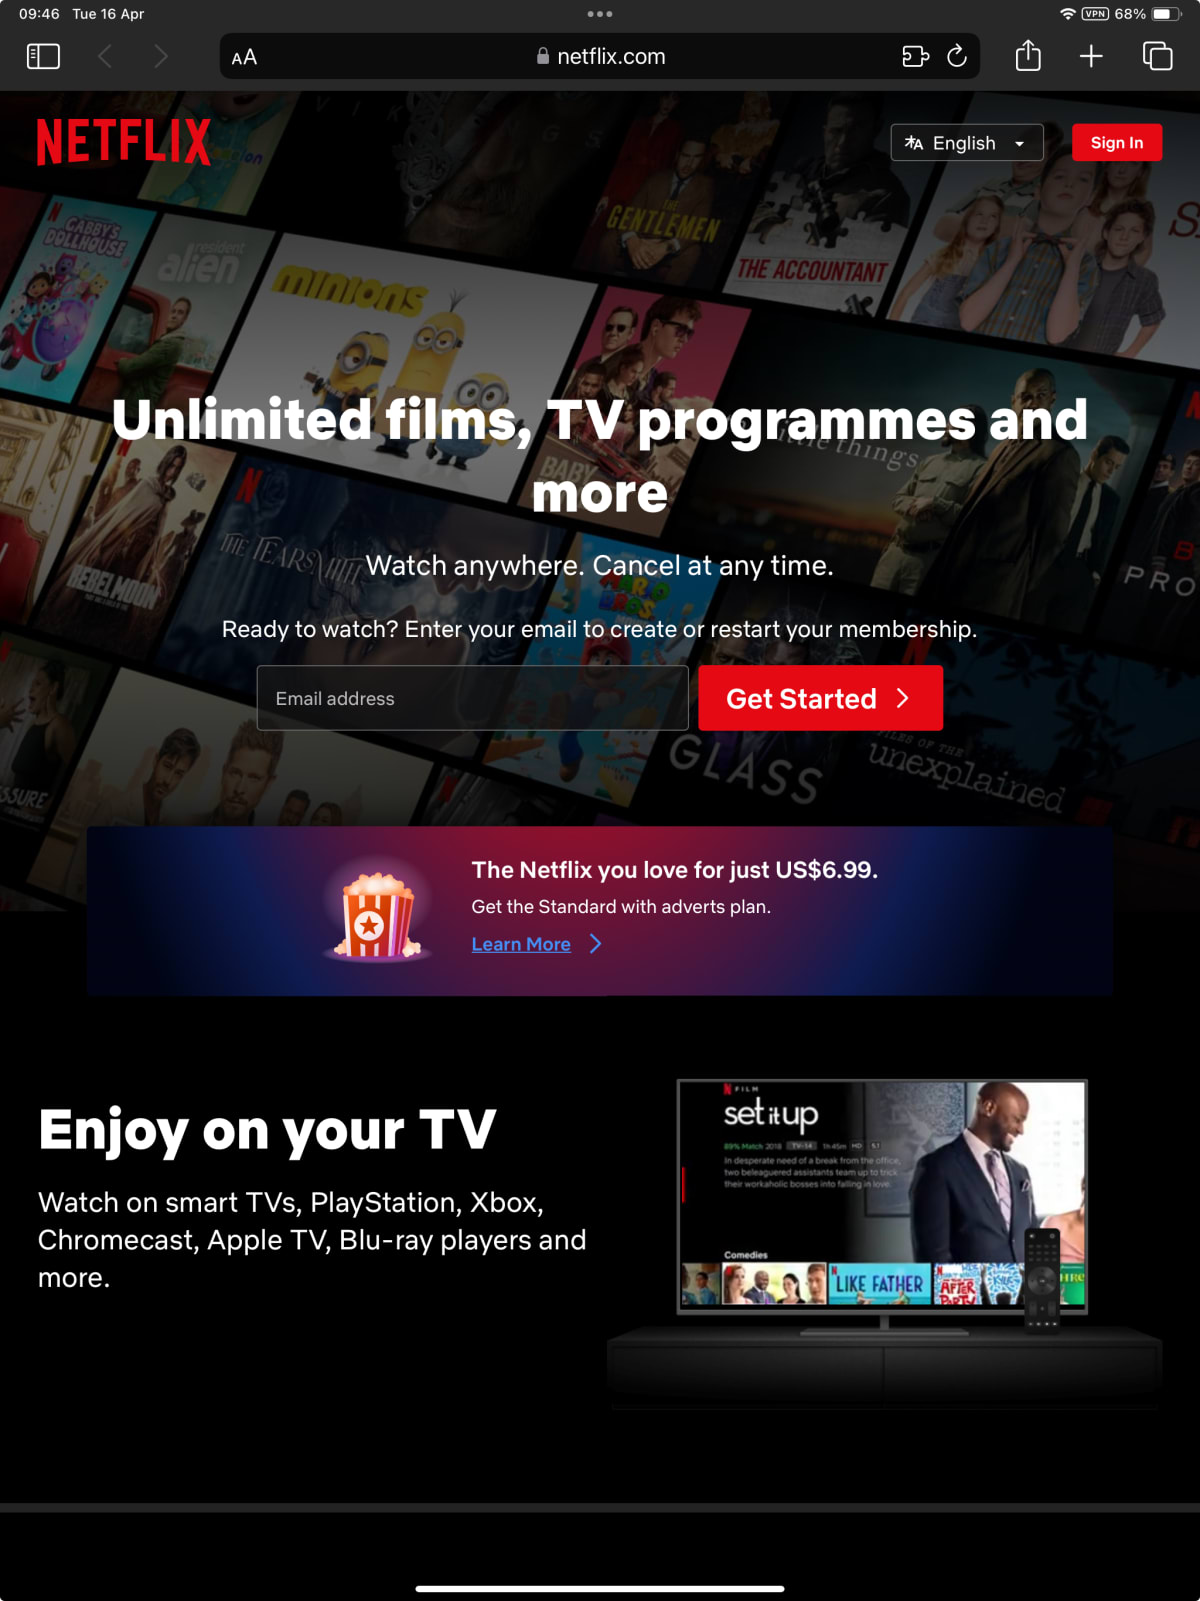 A screenshot of the Netflix.com homepage.